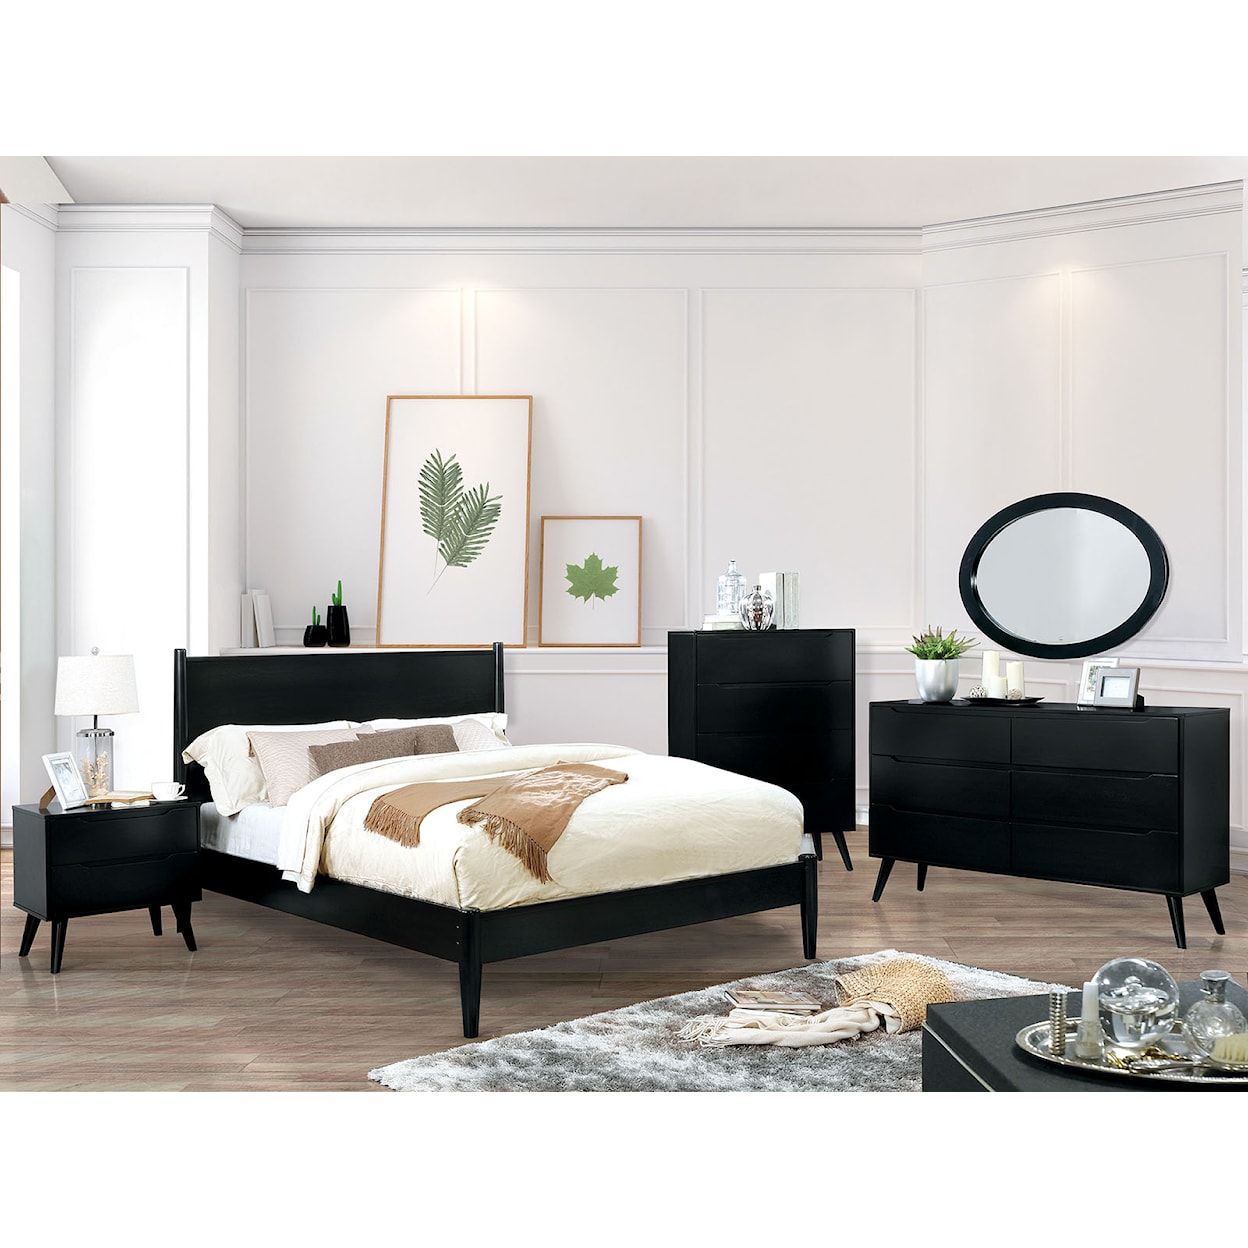 Furniture of America Lennart 4 Pc. Full Bedroom Set w/ Oval Mirror